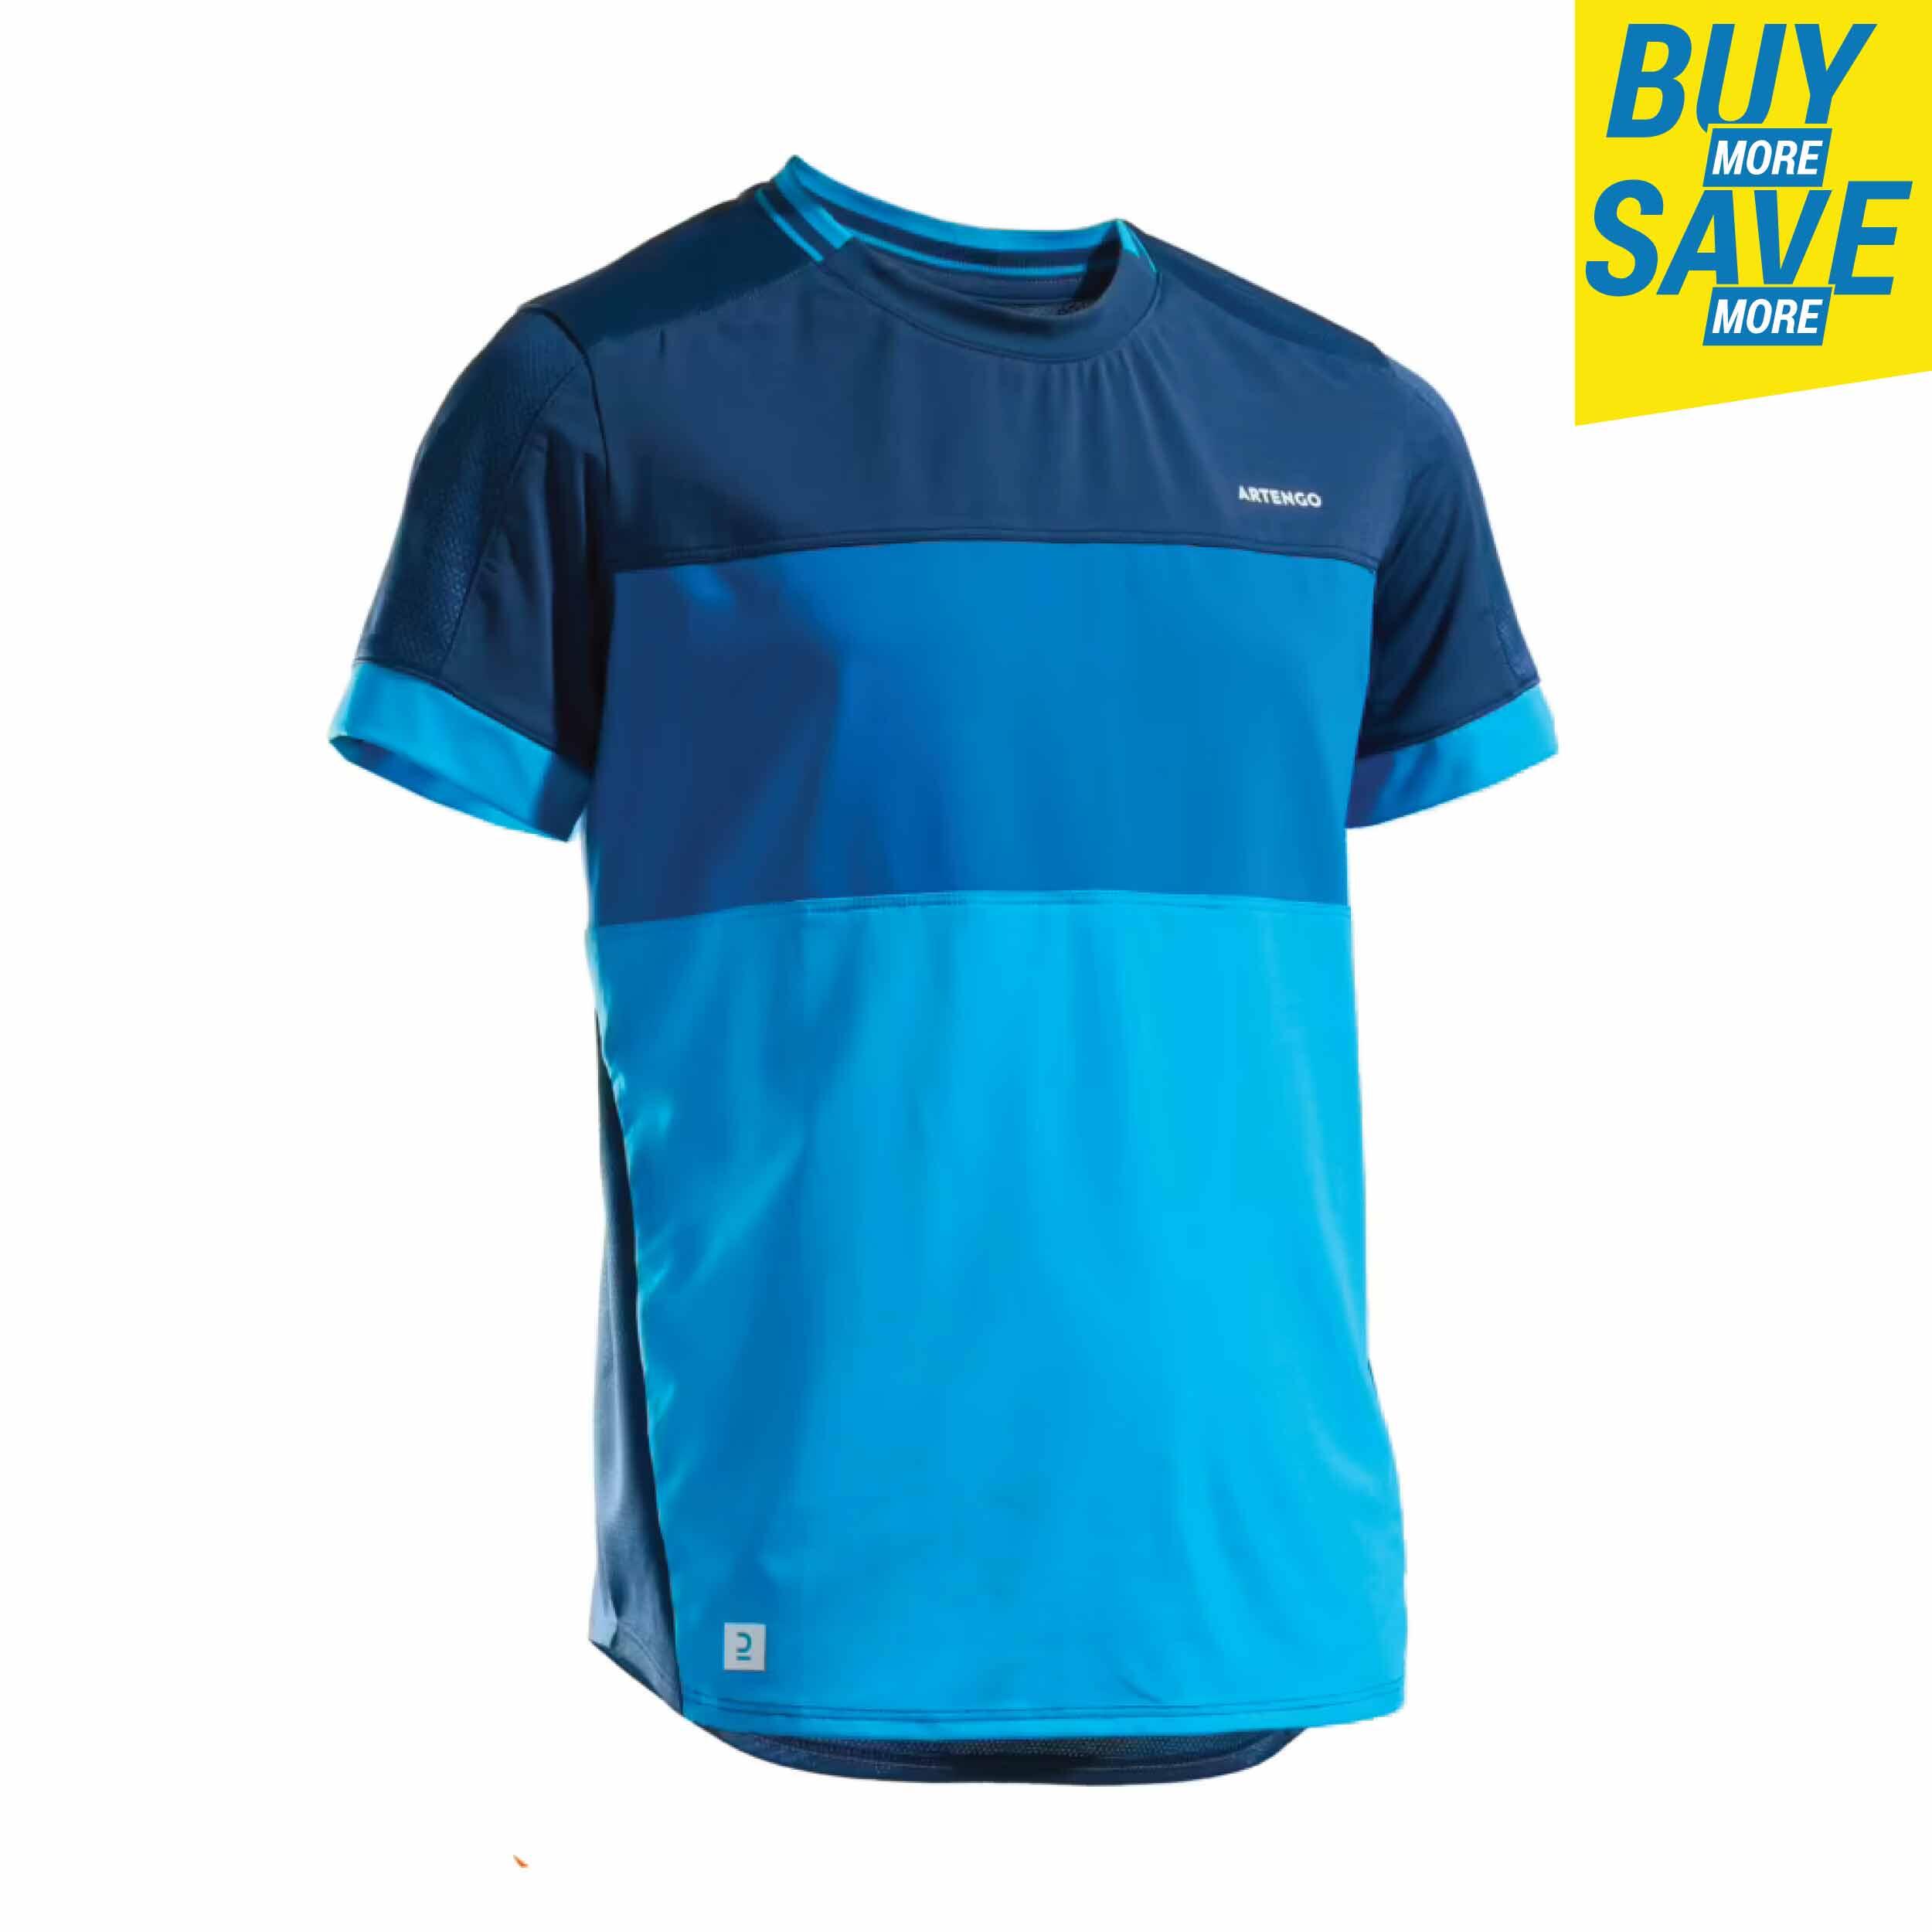 Boys' Tennis T-Shirt - Dry 500 Blue - ARTENGO